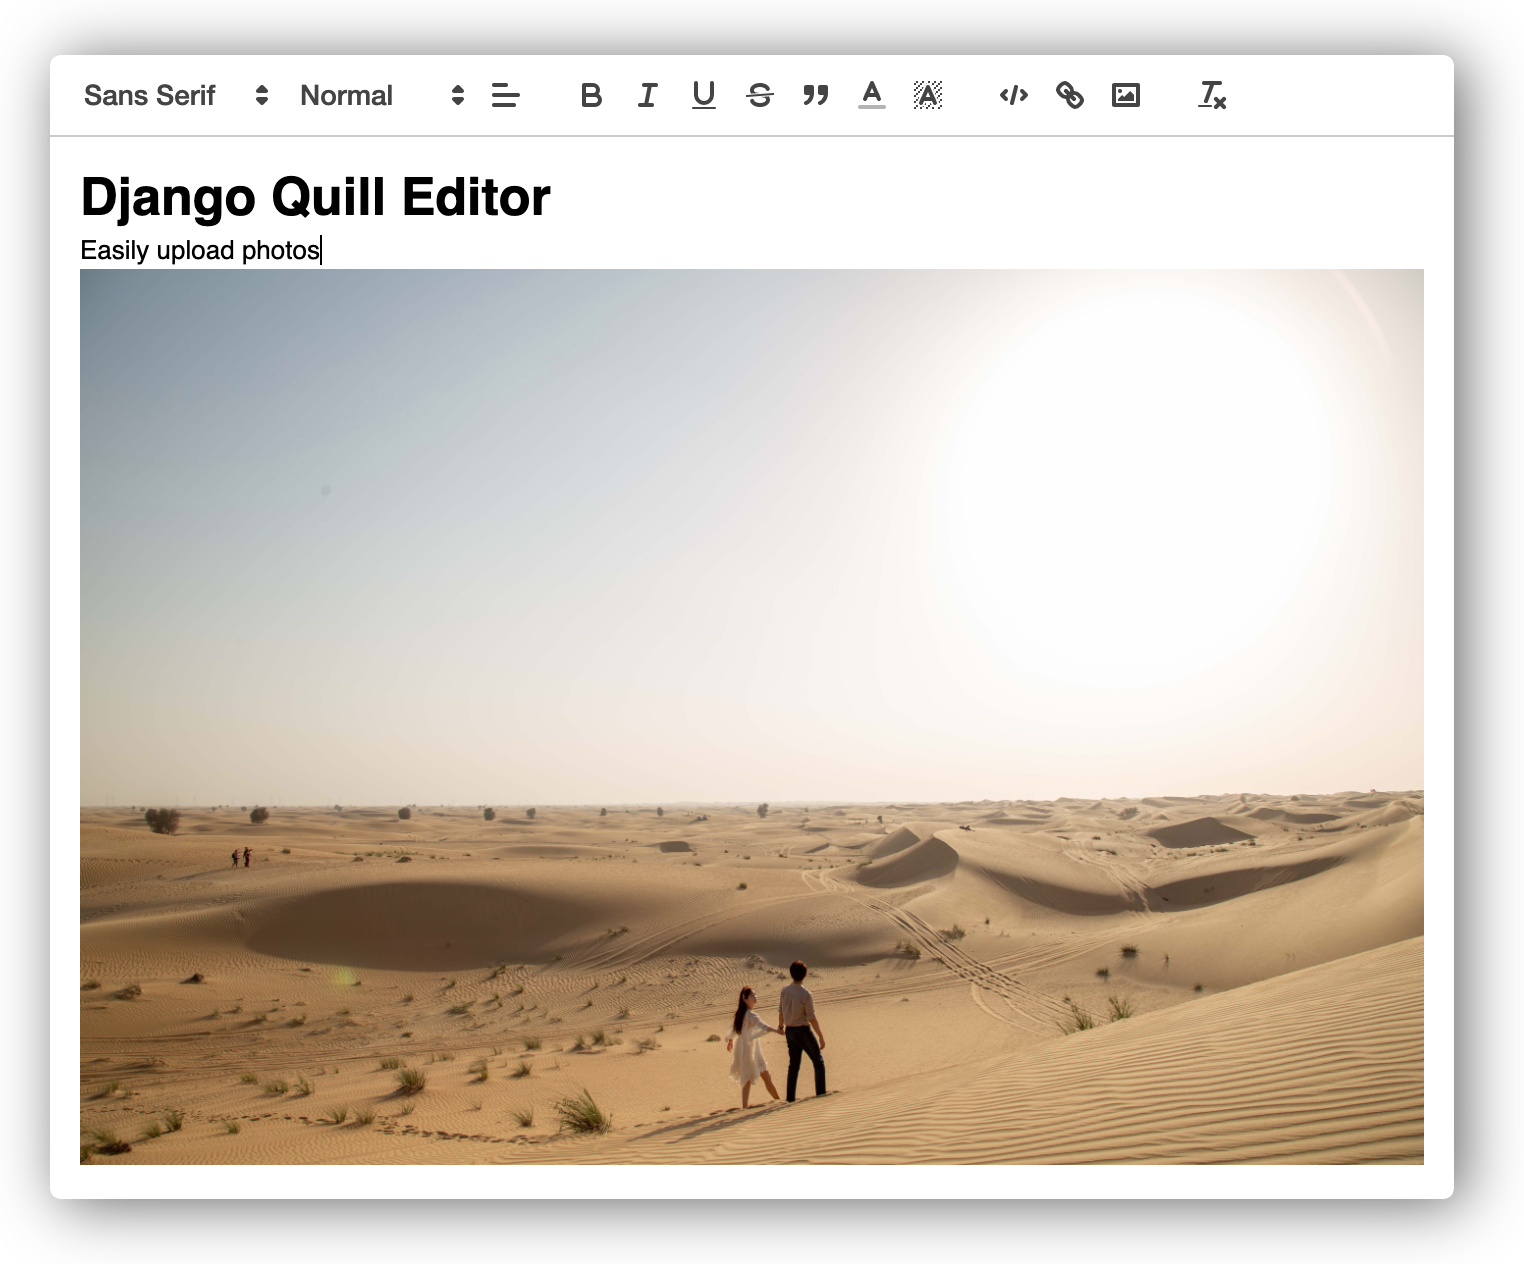 _images/django-quill-editor-sample.png